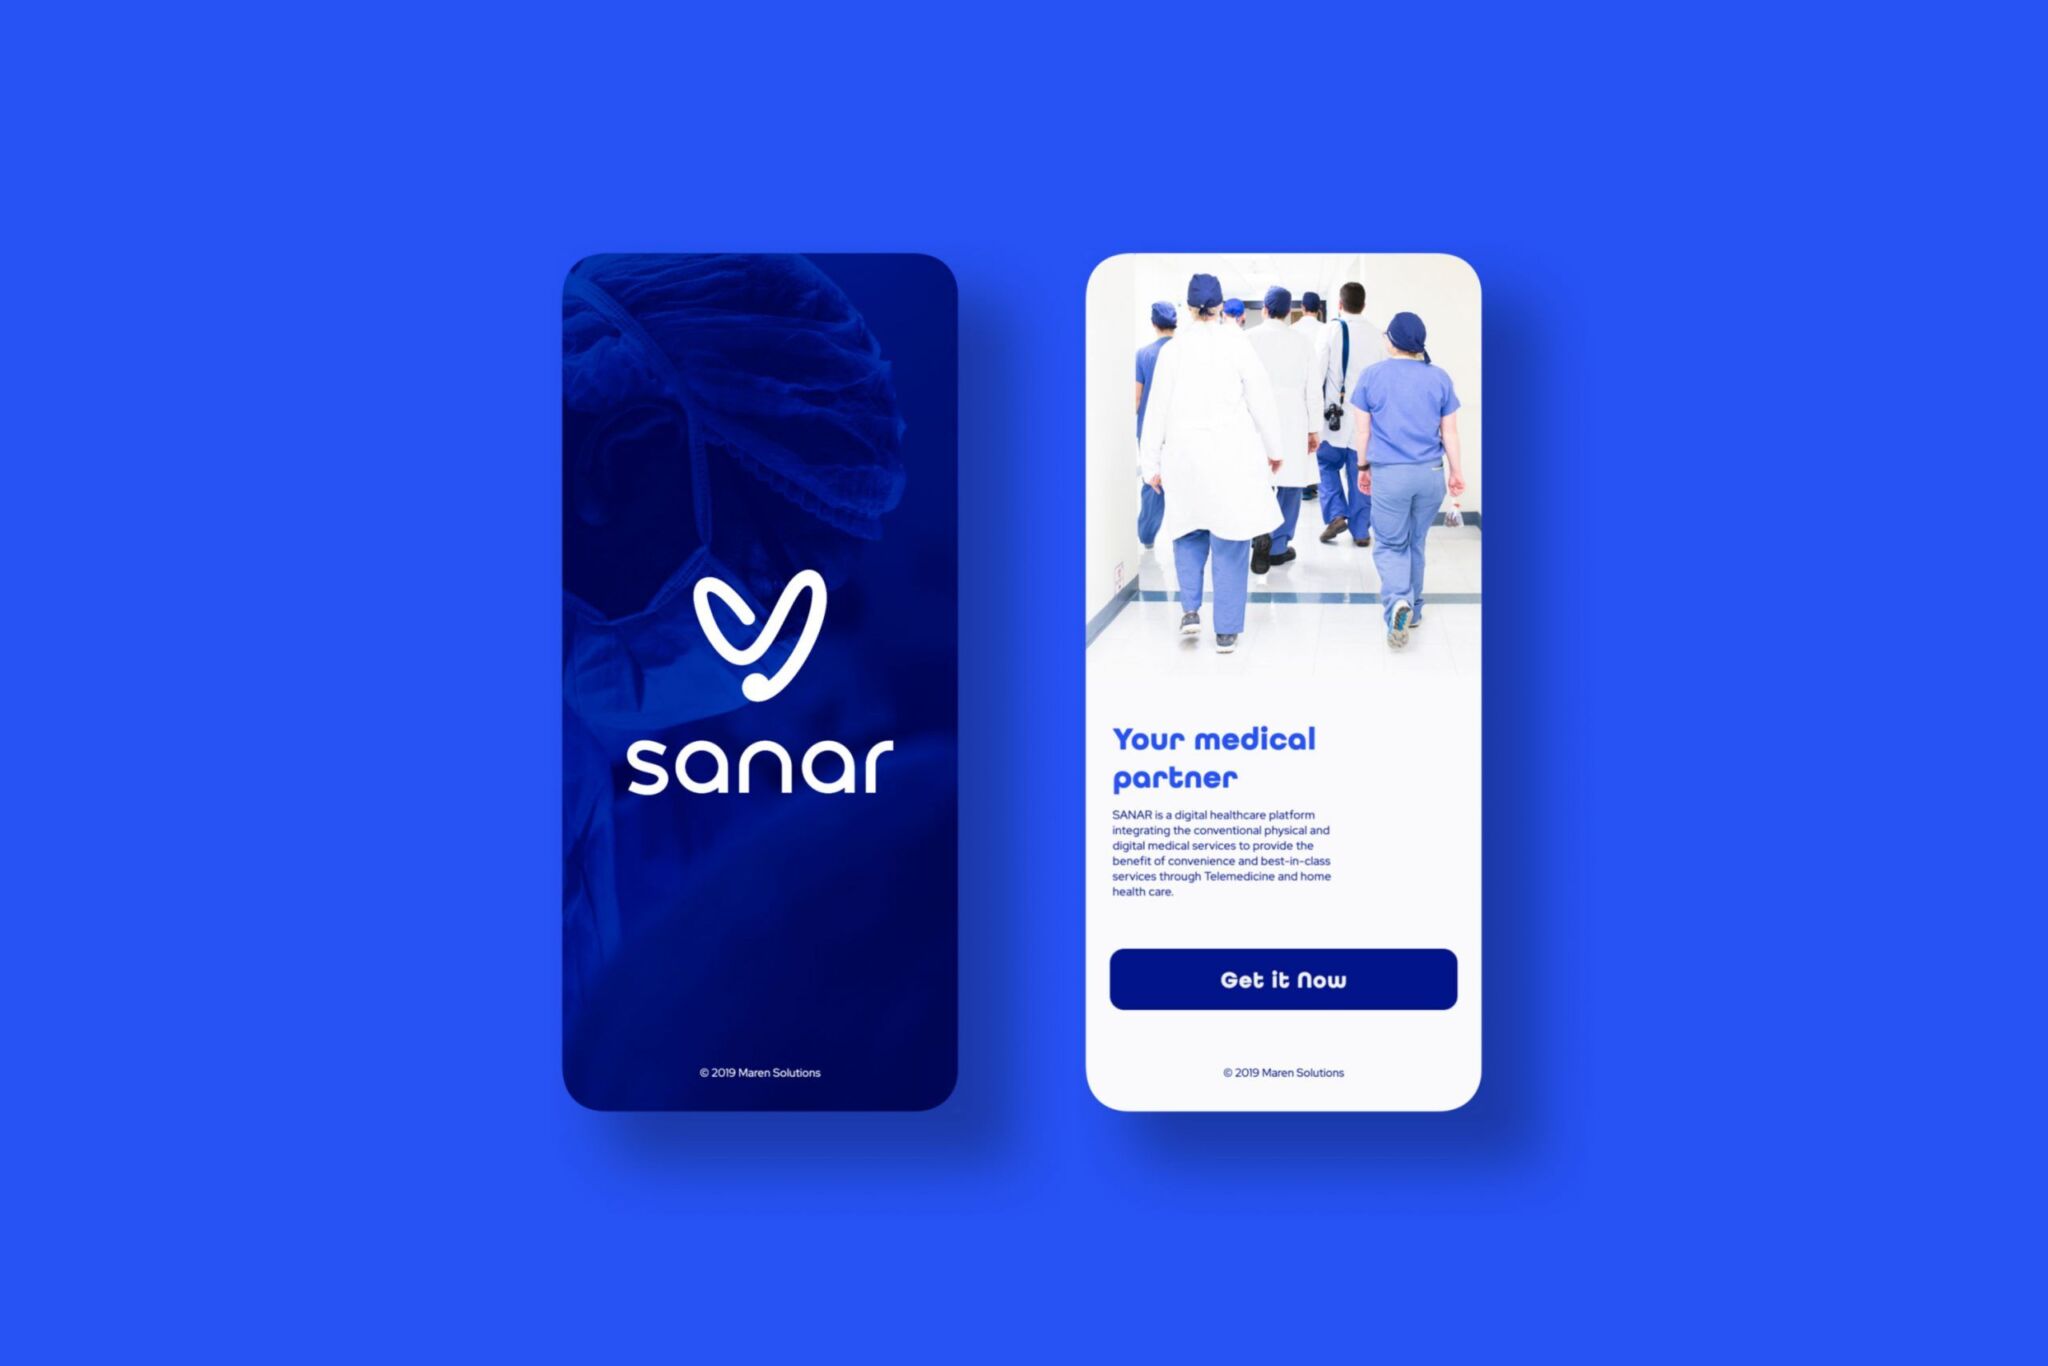 Sanar app images